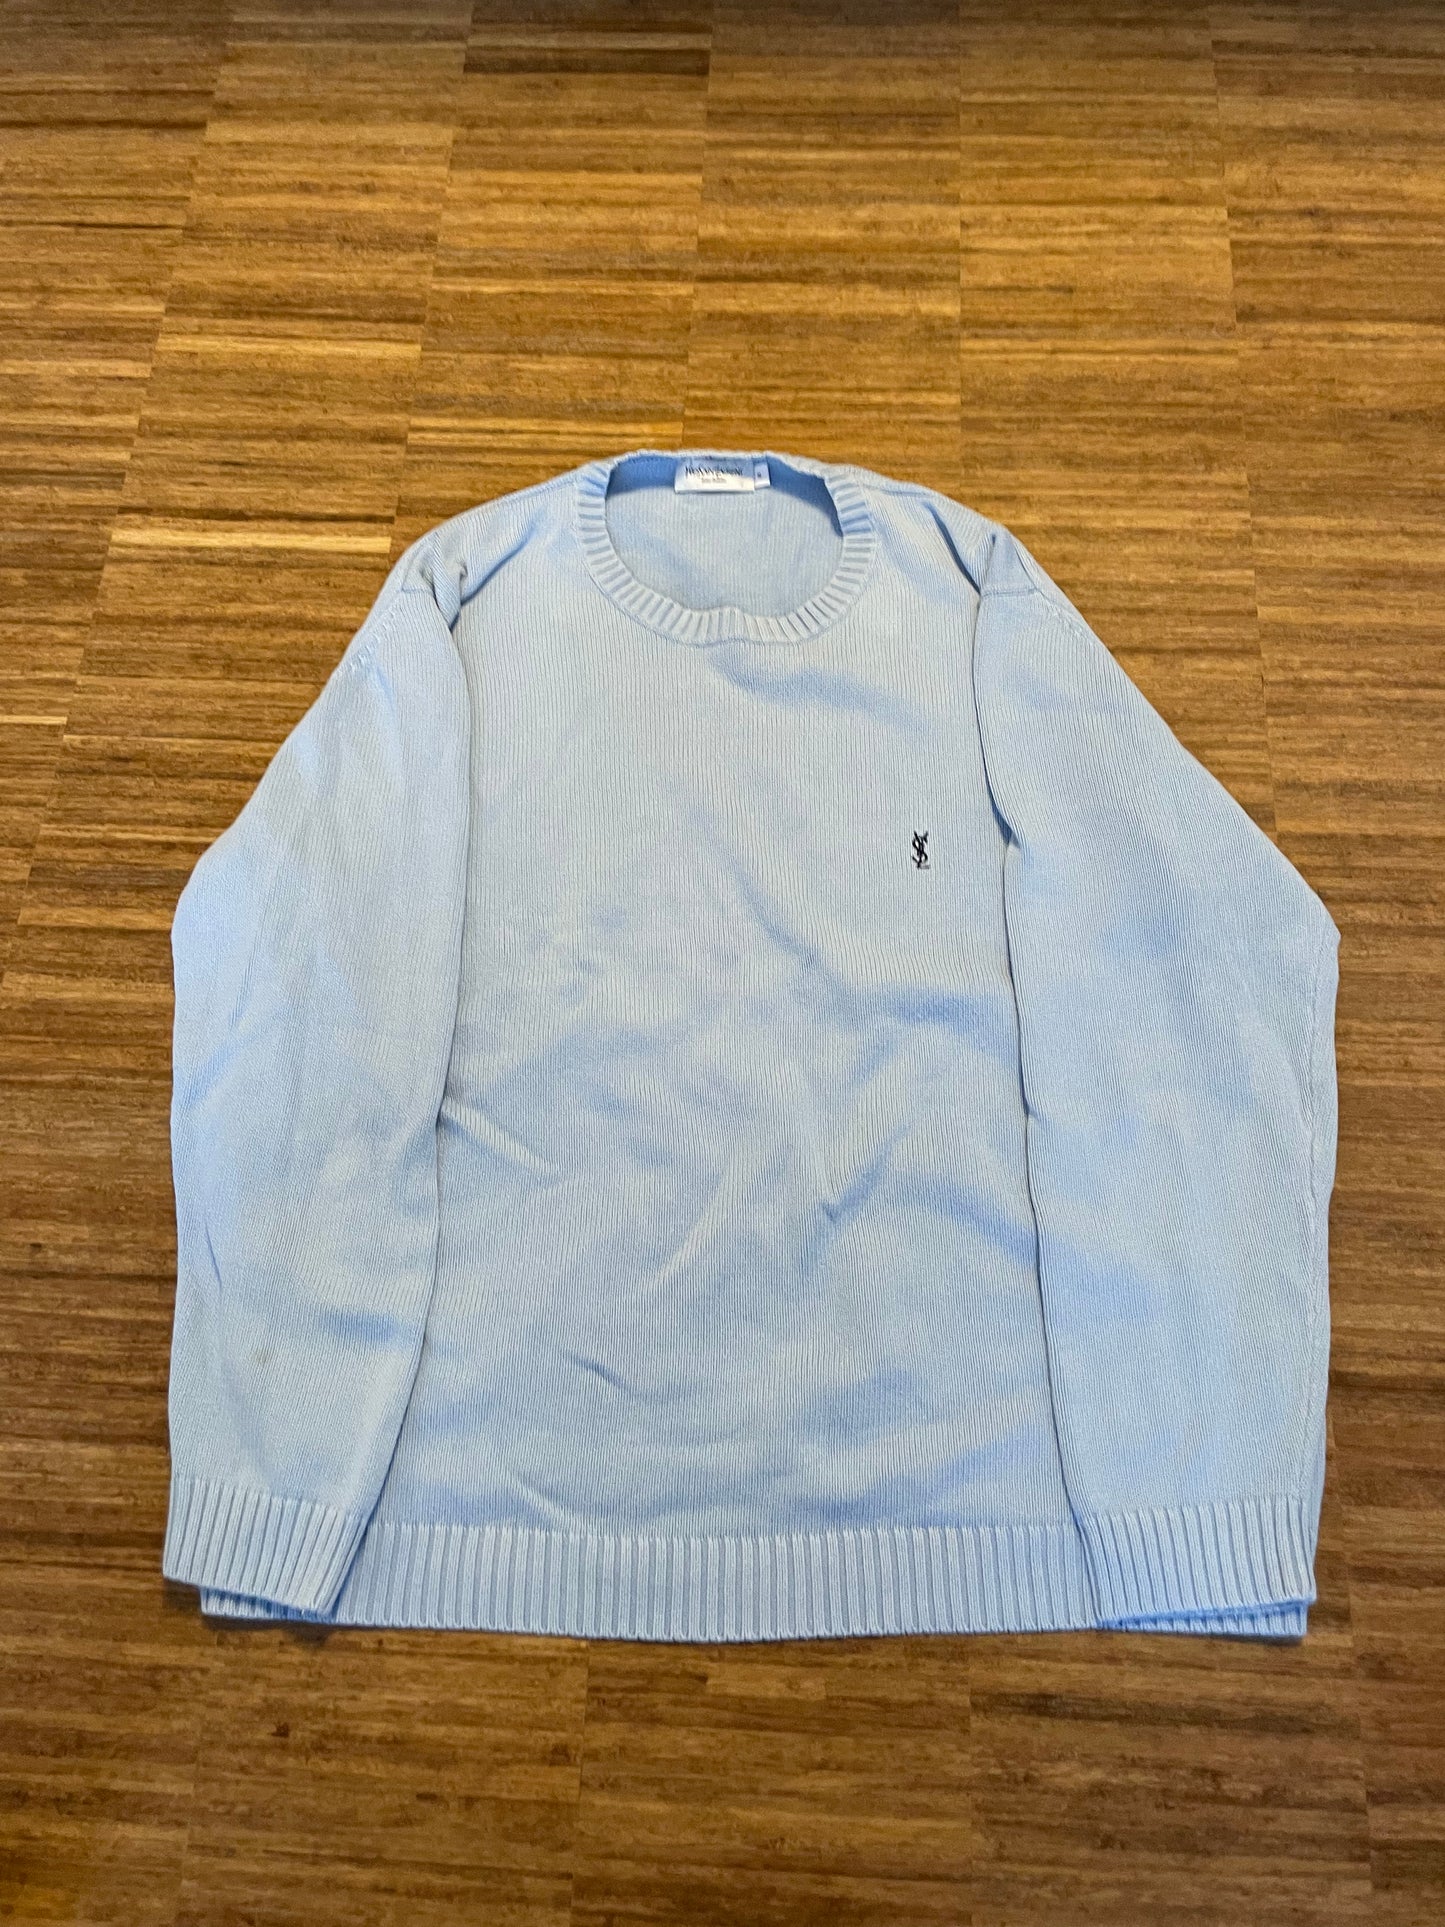 YSL Sweater (XL)